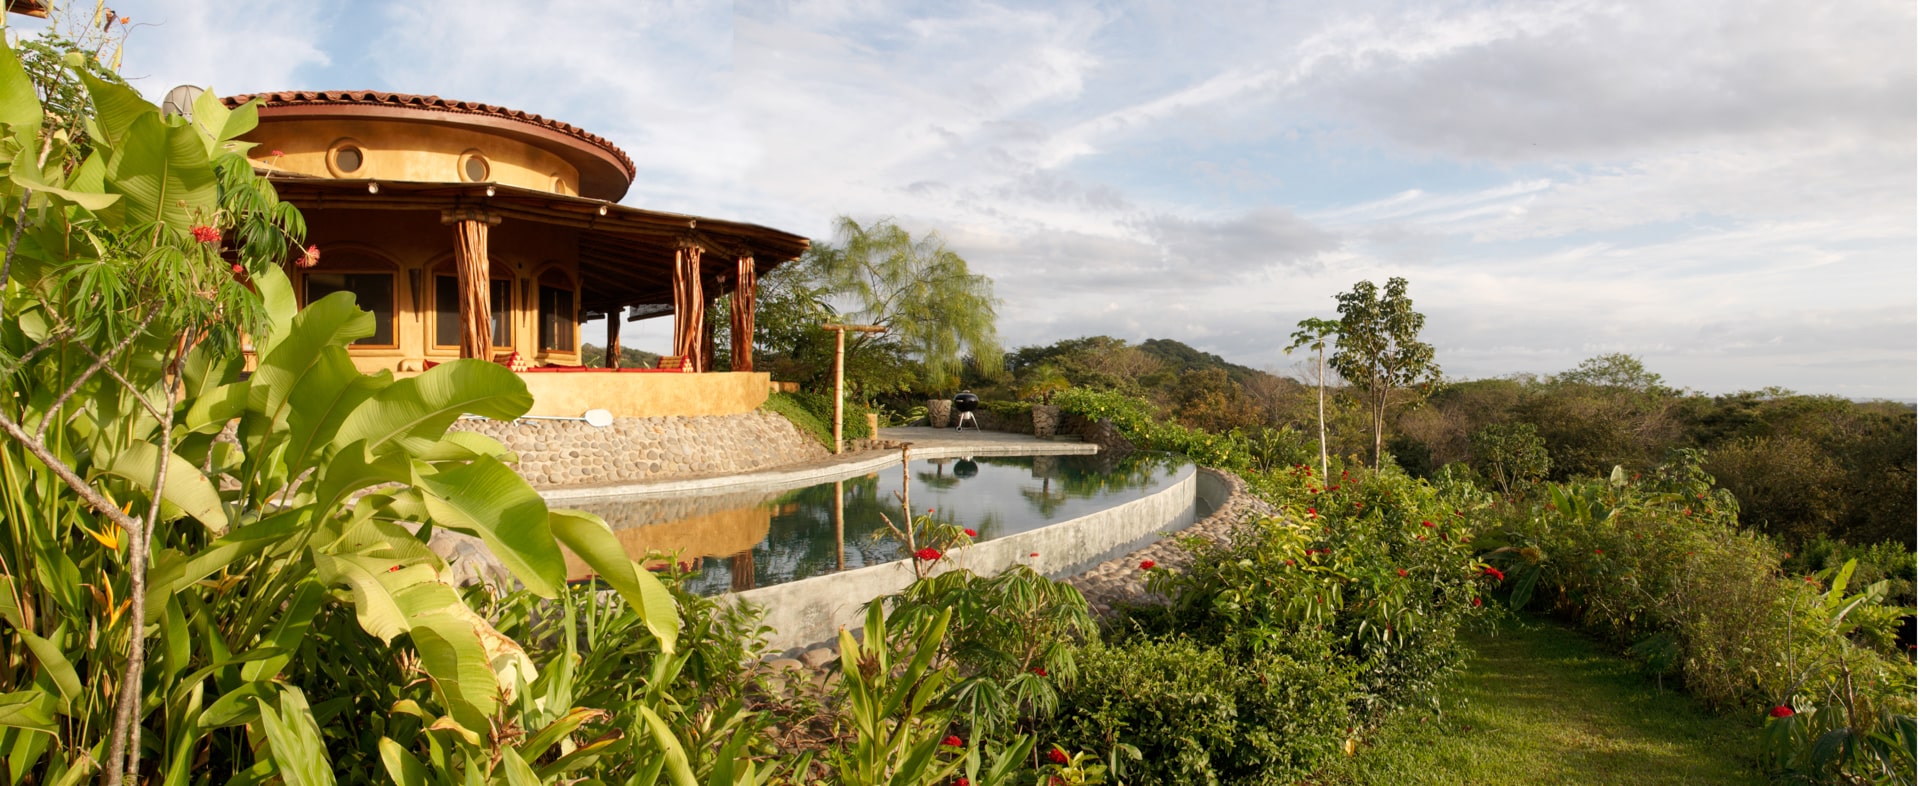 Casa Shambala Avellanas Costa Rica vacation rental infinity pool